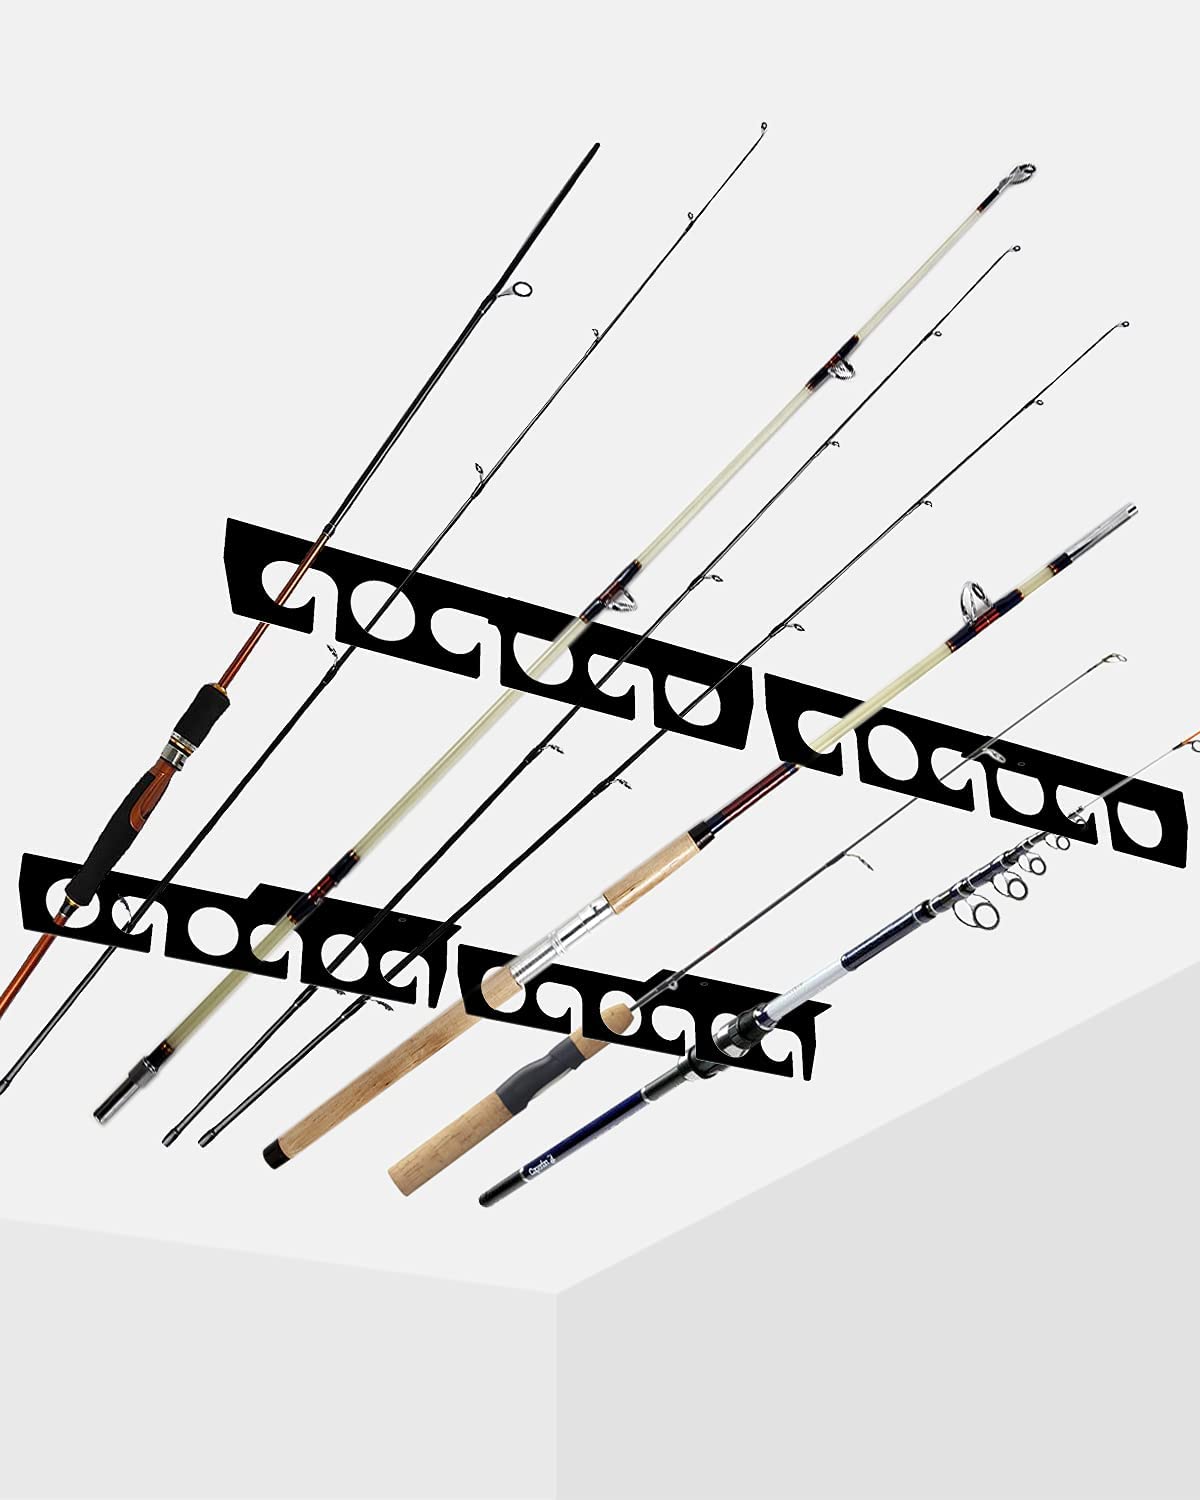 PLUSINNO H5 Horizontal Fishing Rod/Pole Holders for Garage, Wall